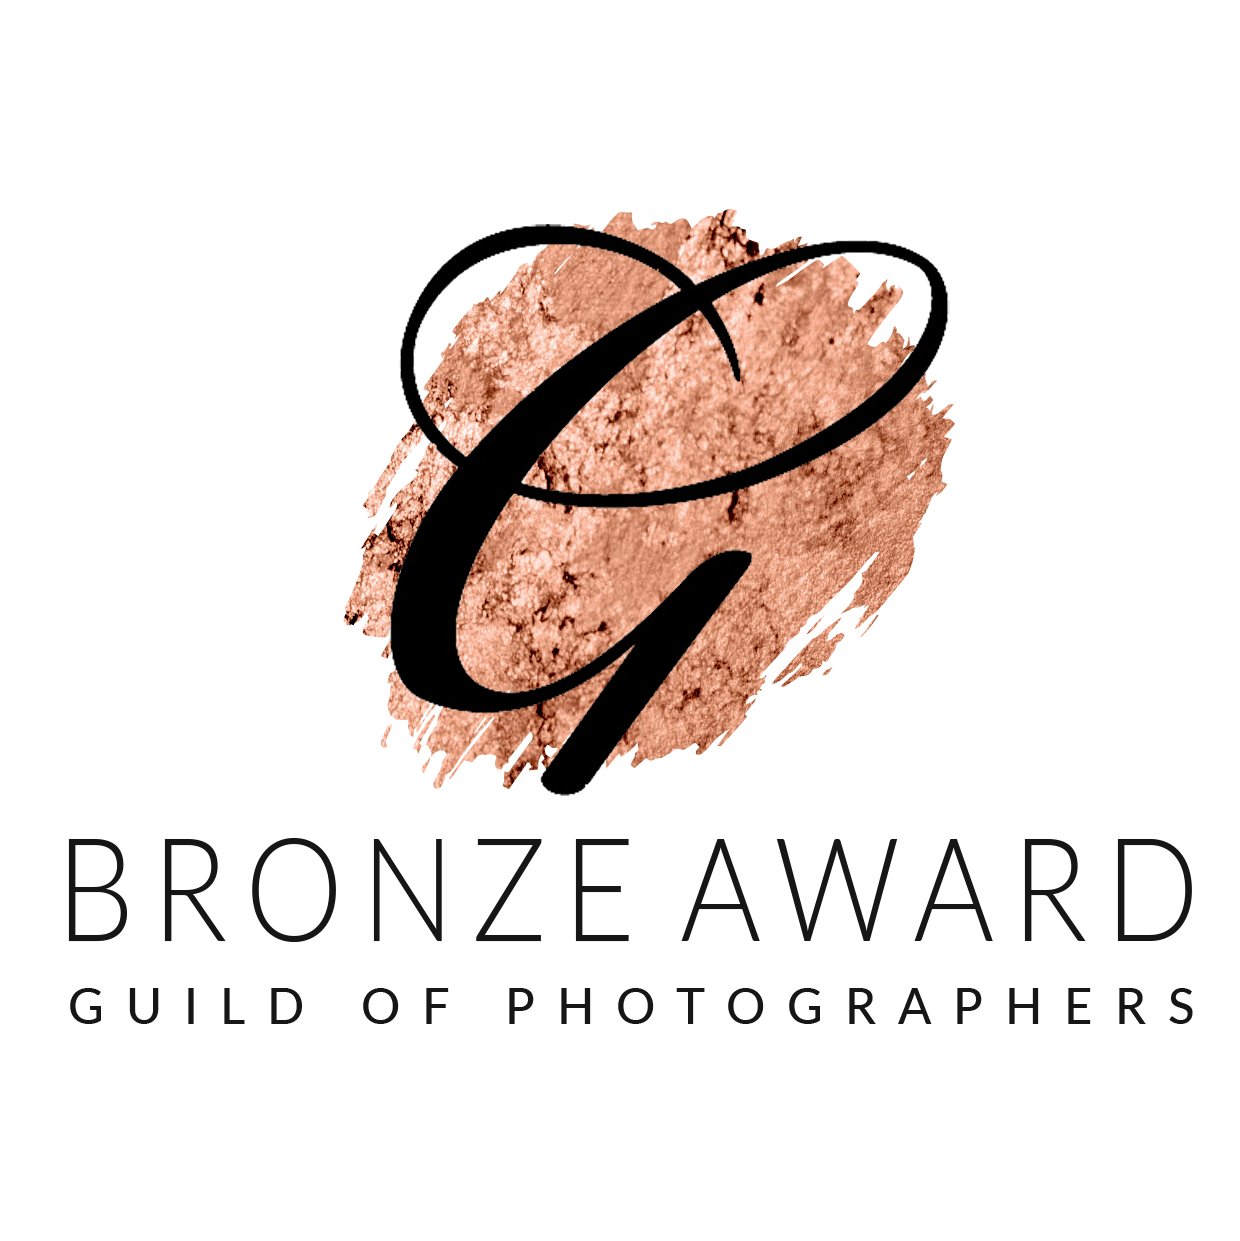 guild of photographers xposure studios liverpool bronze award